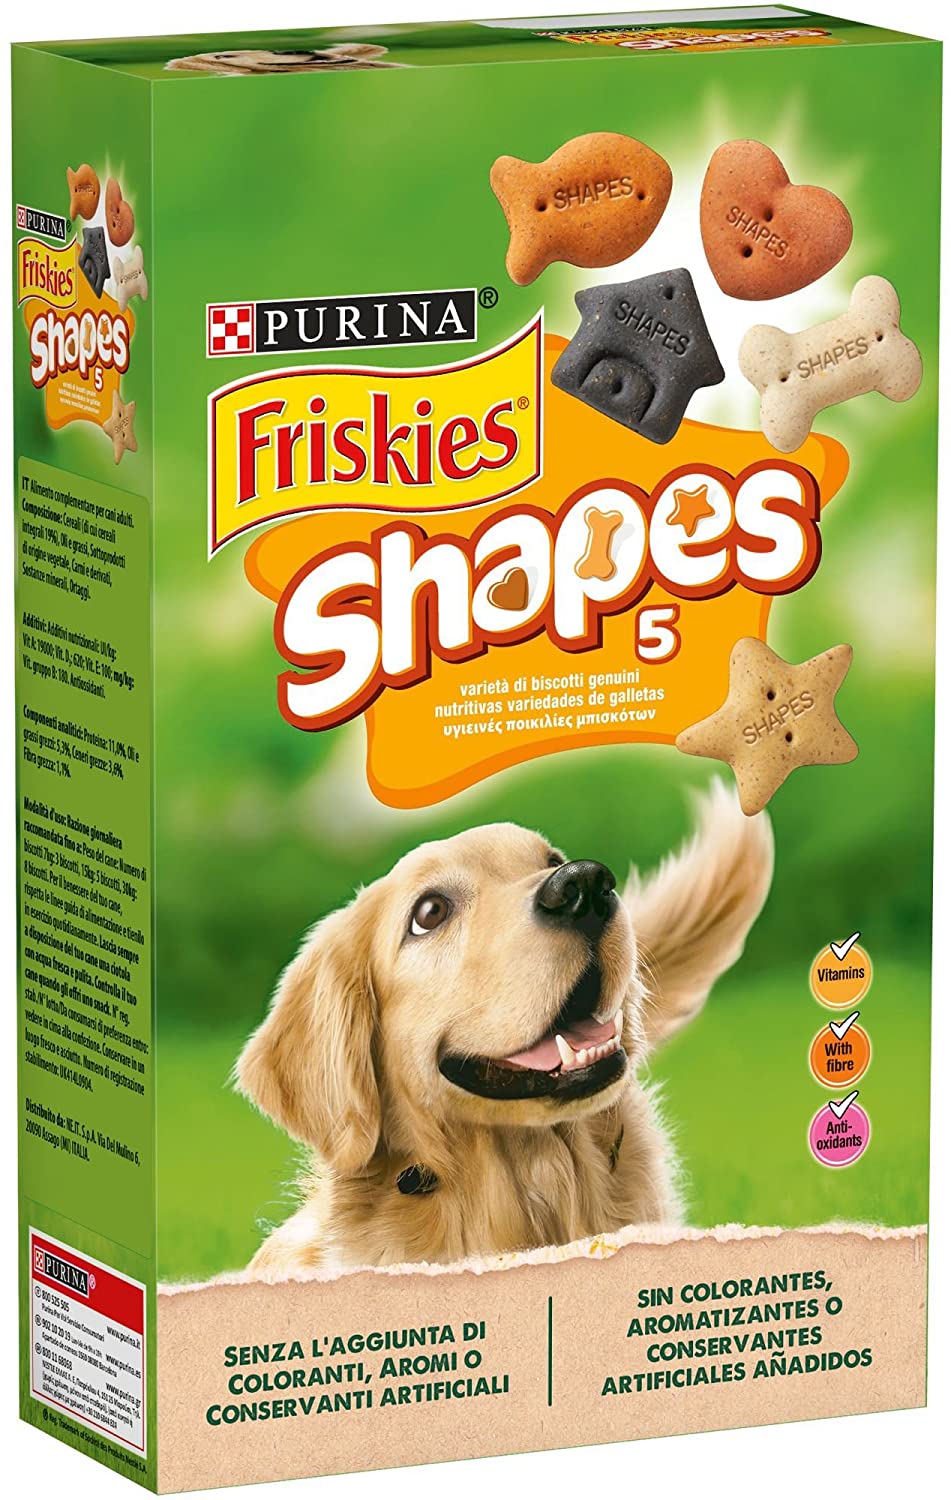  Purina Friskies Shapes galletas para perros 6 x 800 g 